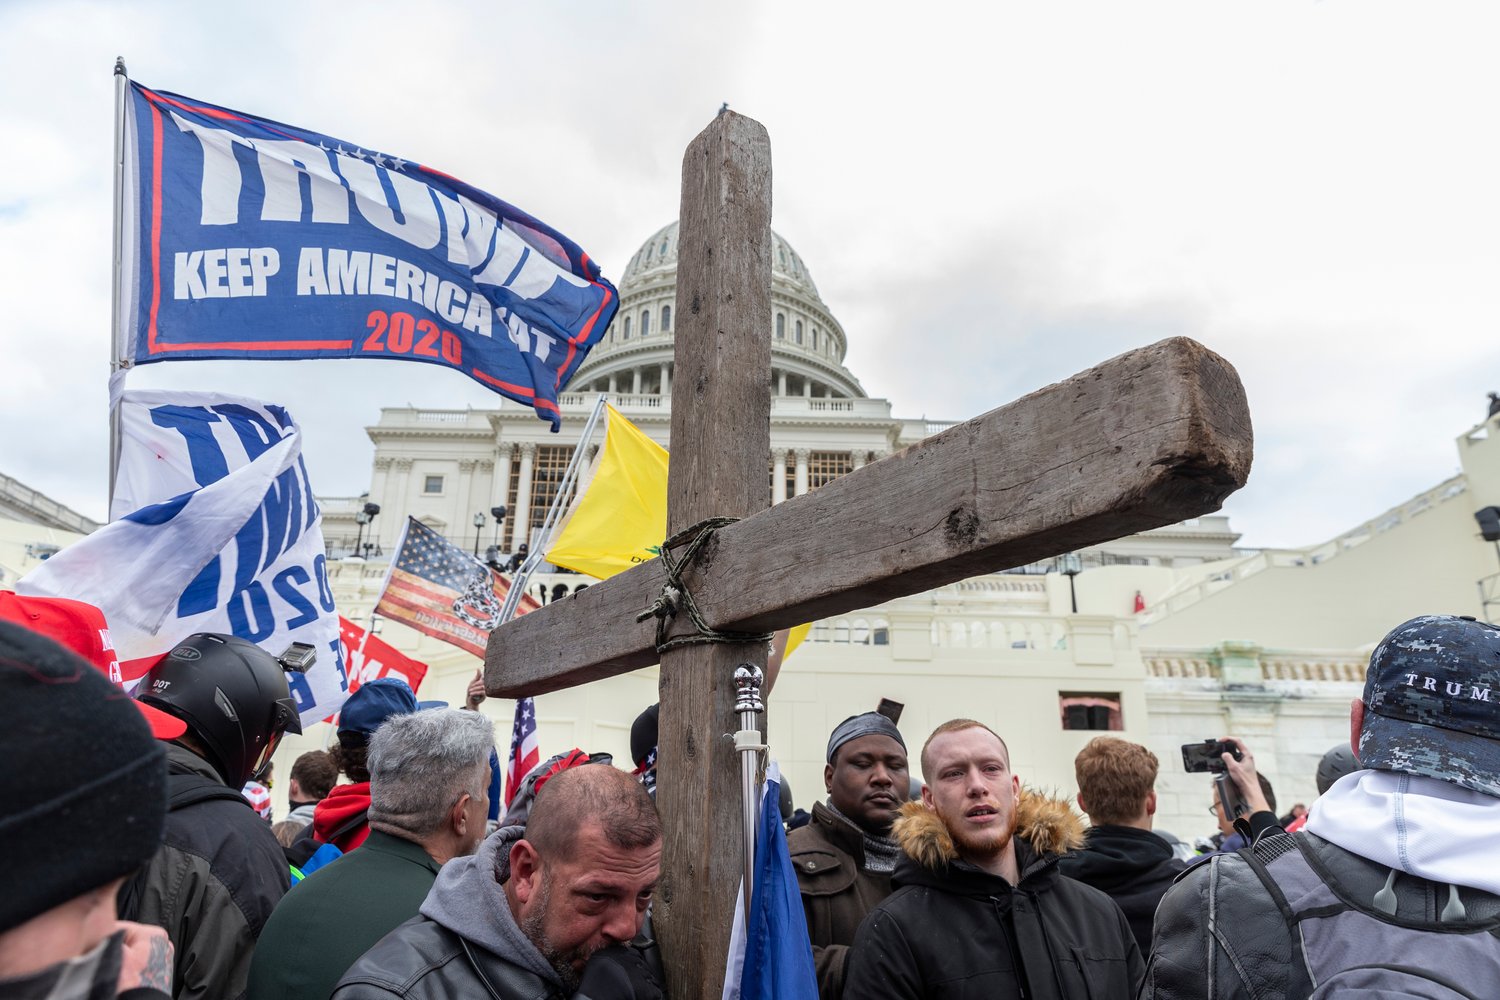 ‘Overhyped’ Christian nationalism label draws political backlash